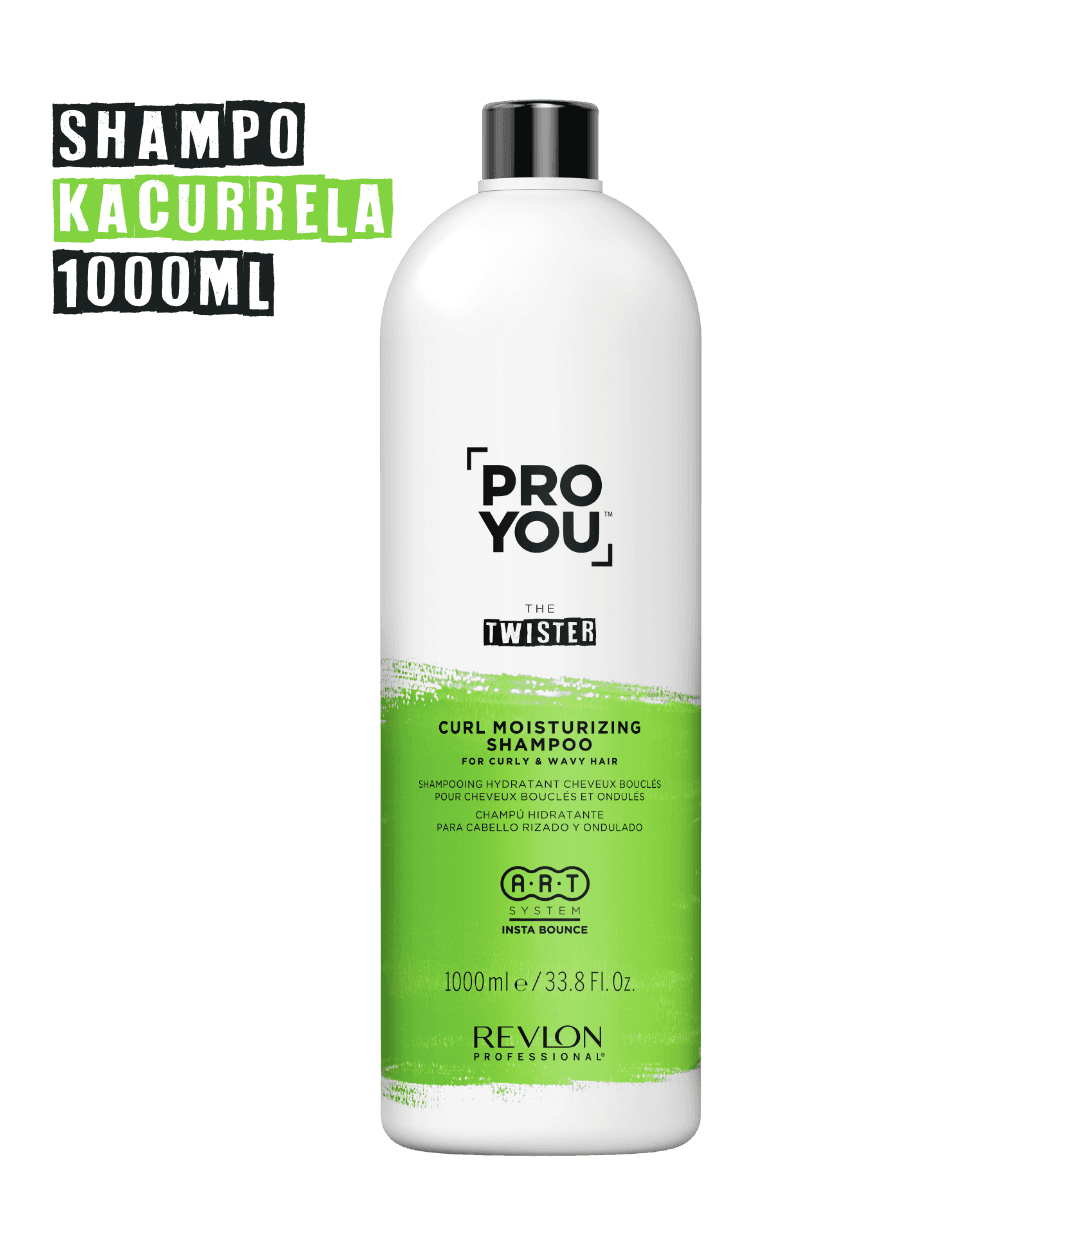 Proyou Twister Curl Shampoo - Sagema